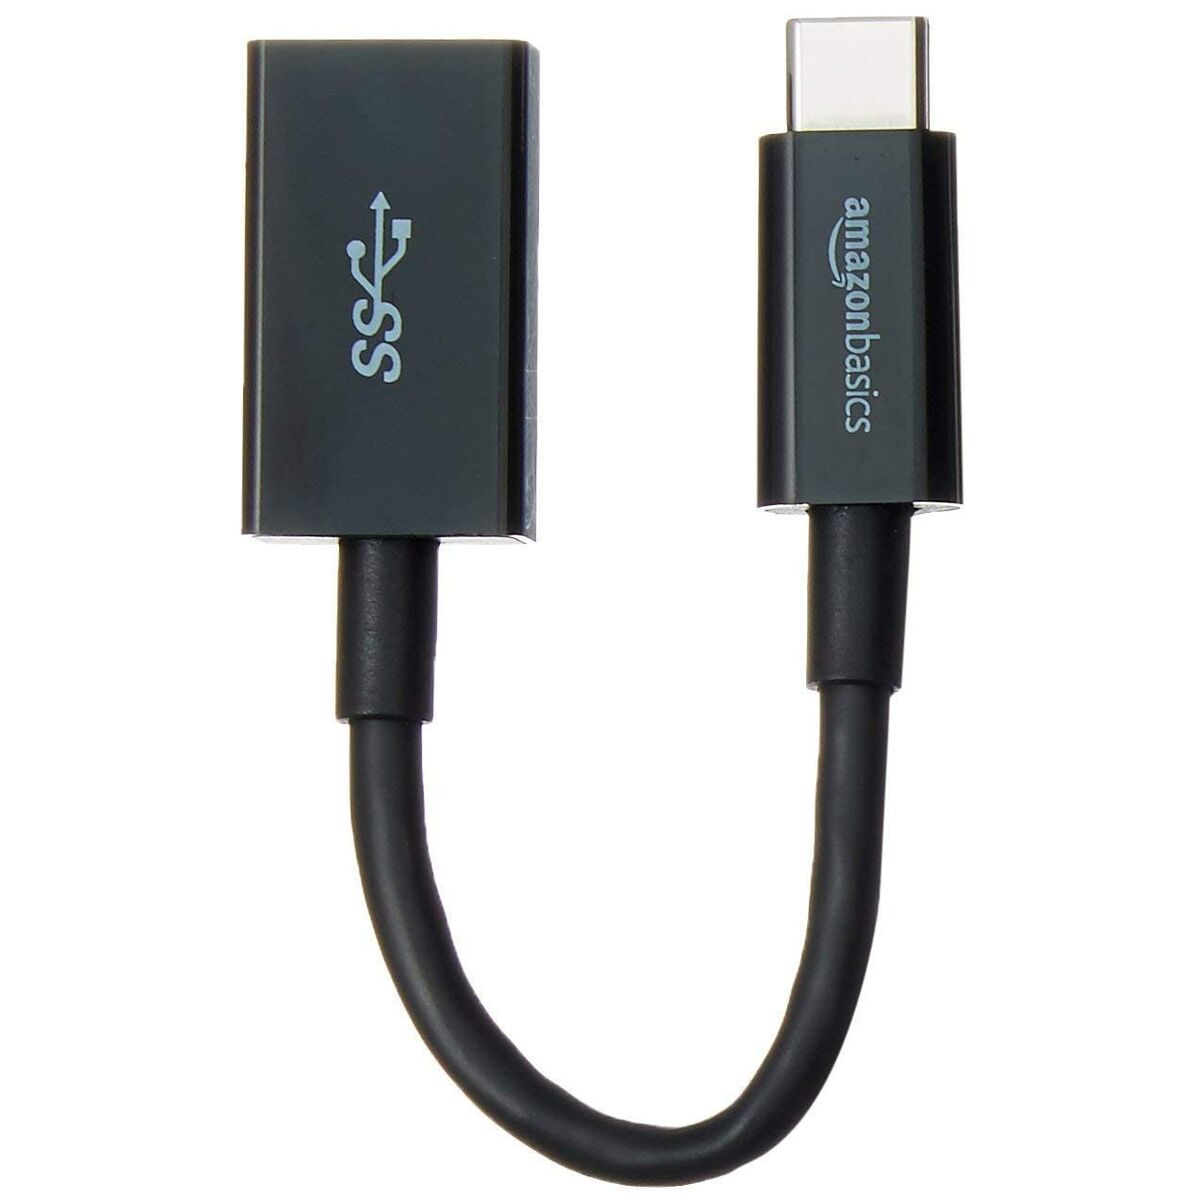 USB Adaptor Amazon Basics (Refurbished A)